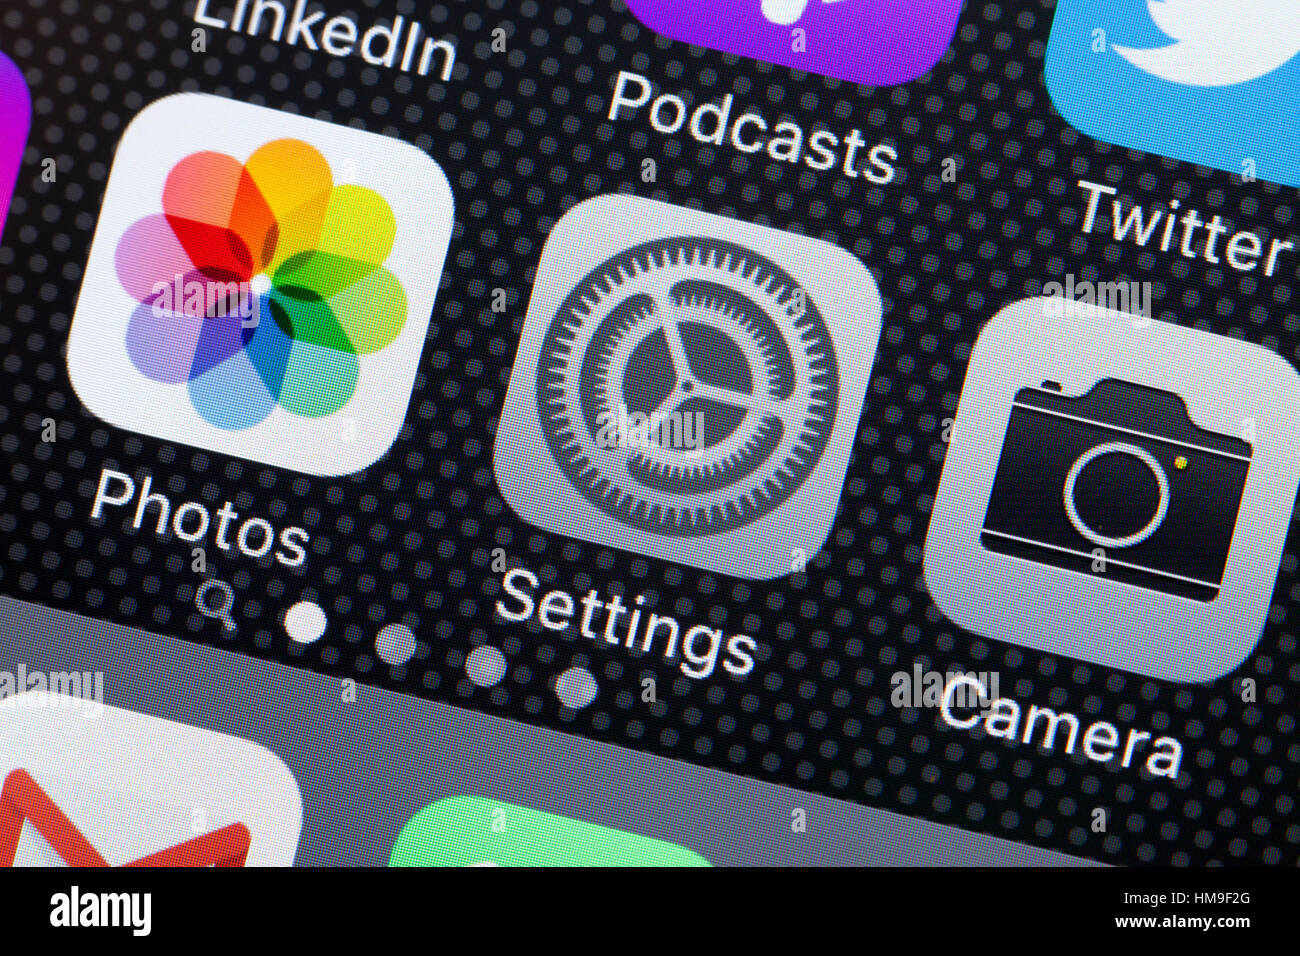 Settings app icon on iPhone screen - USA Stock Photo